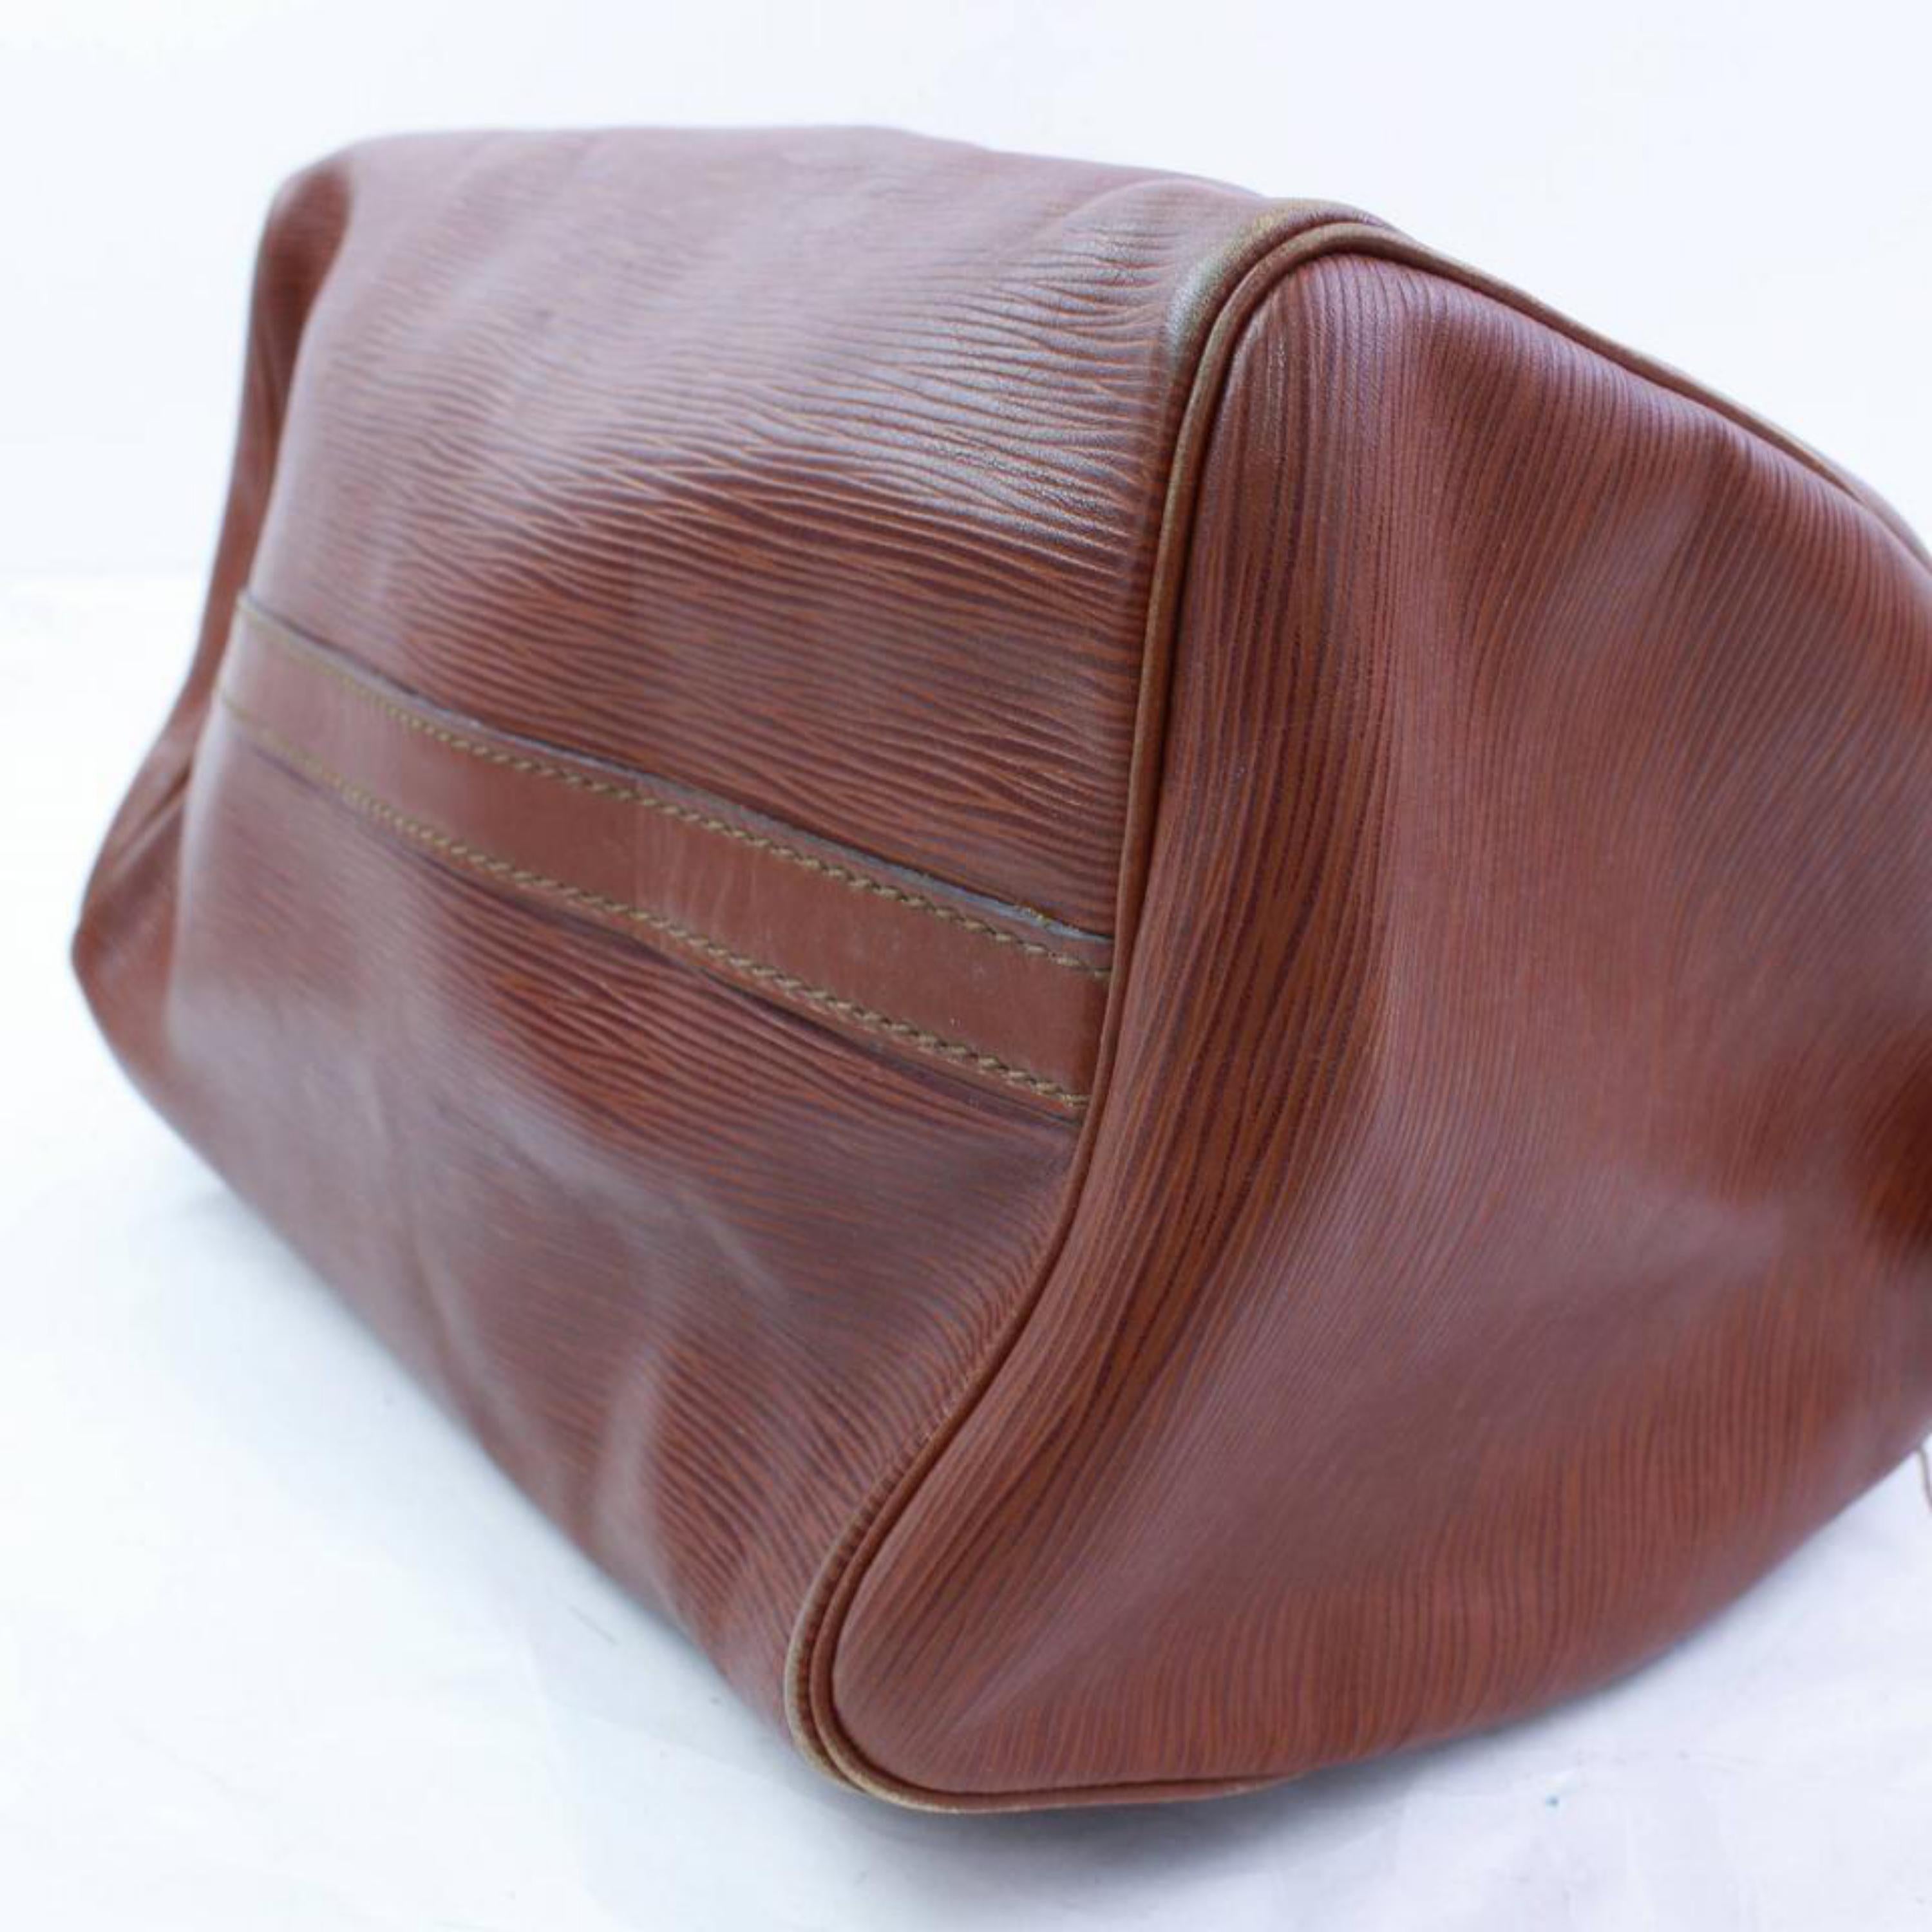 Louis Vuitton Speedy Kenya 30 866818 Brown Leather Satchel For Sale 3